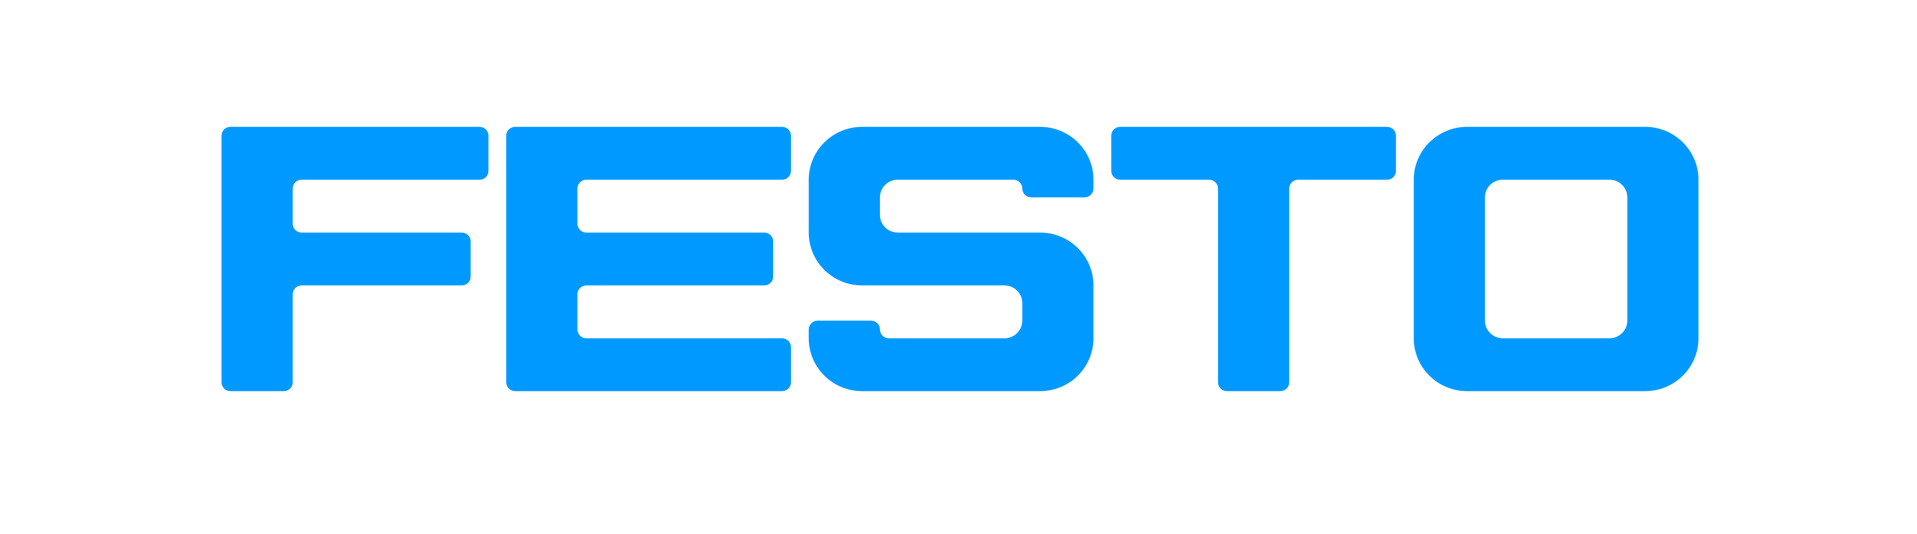 Festo-Sifise Automation